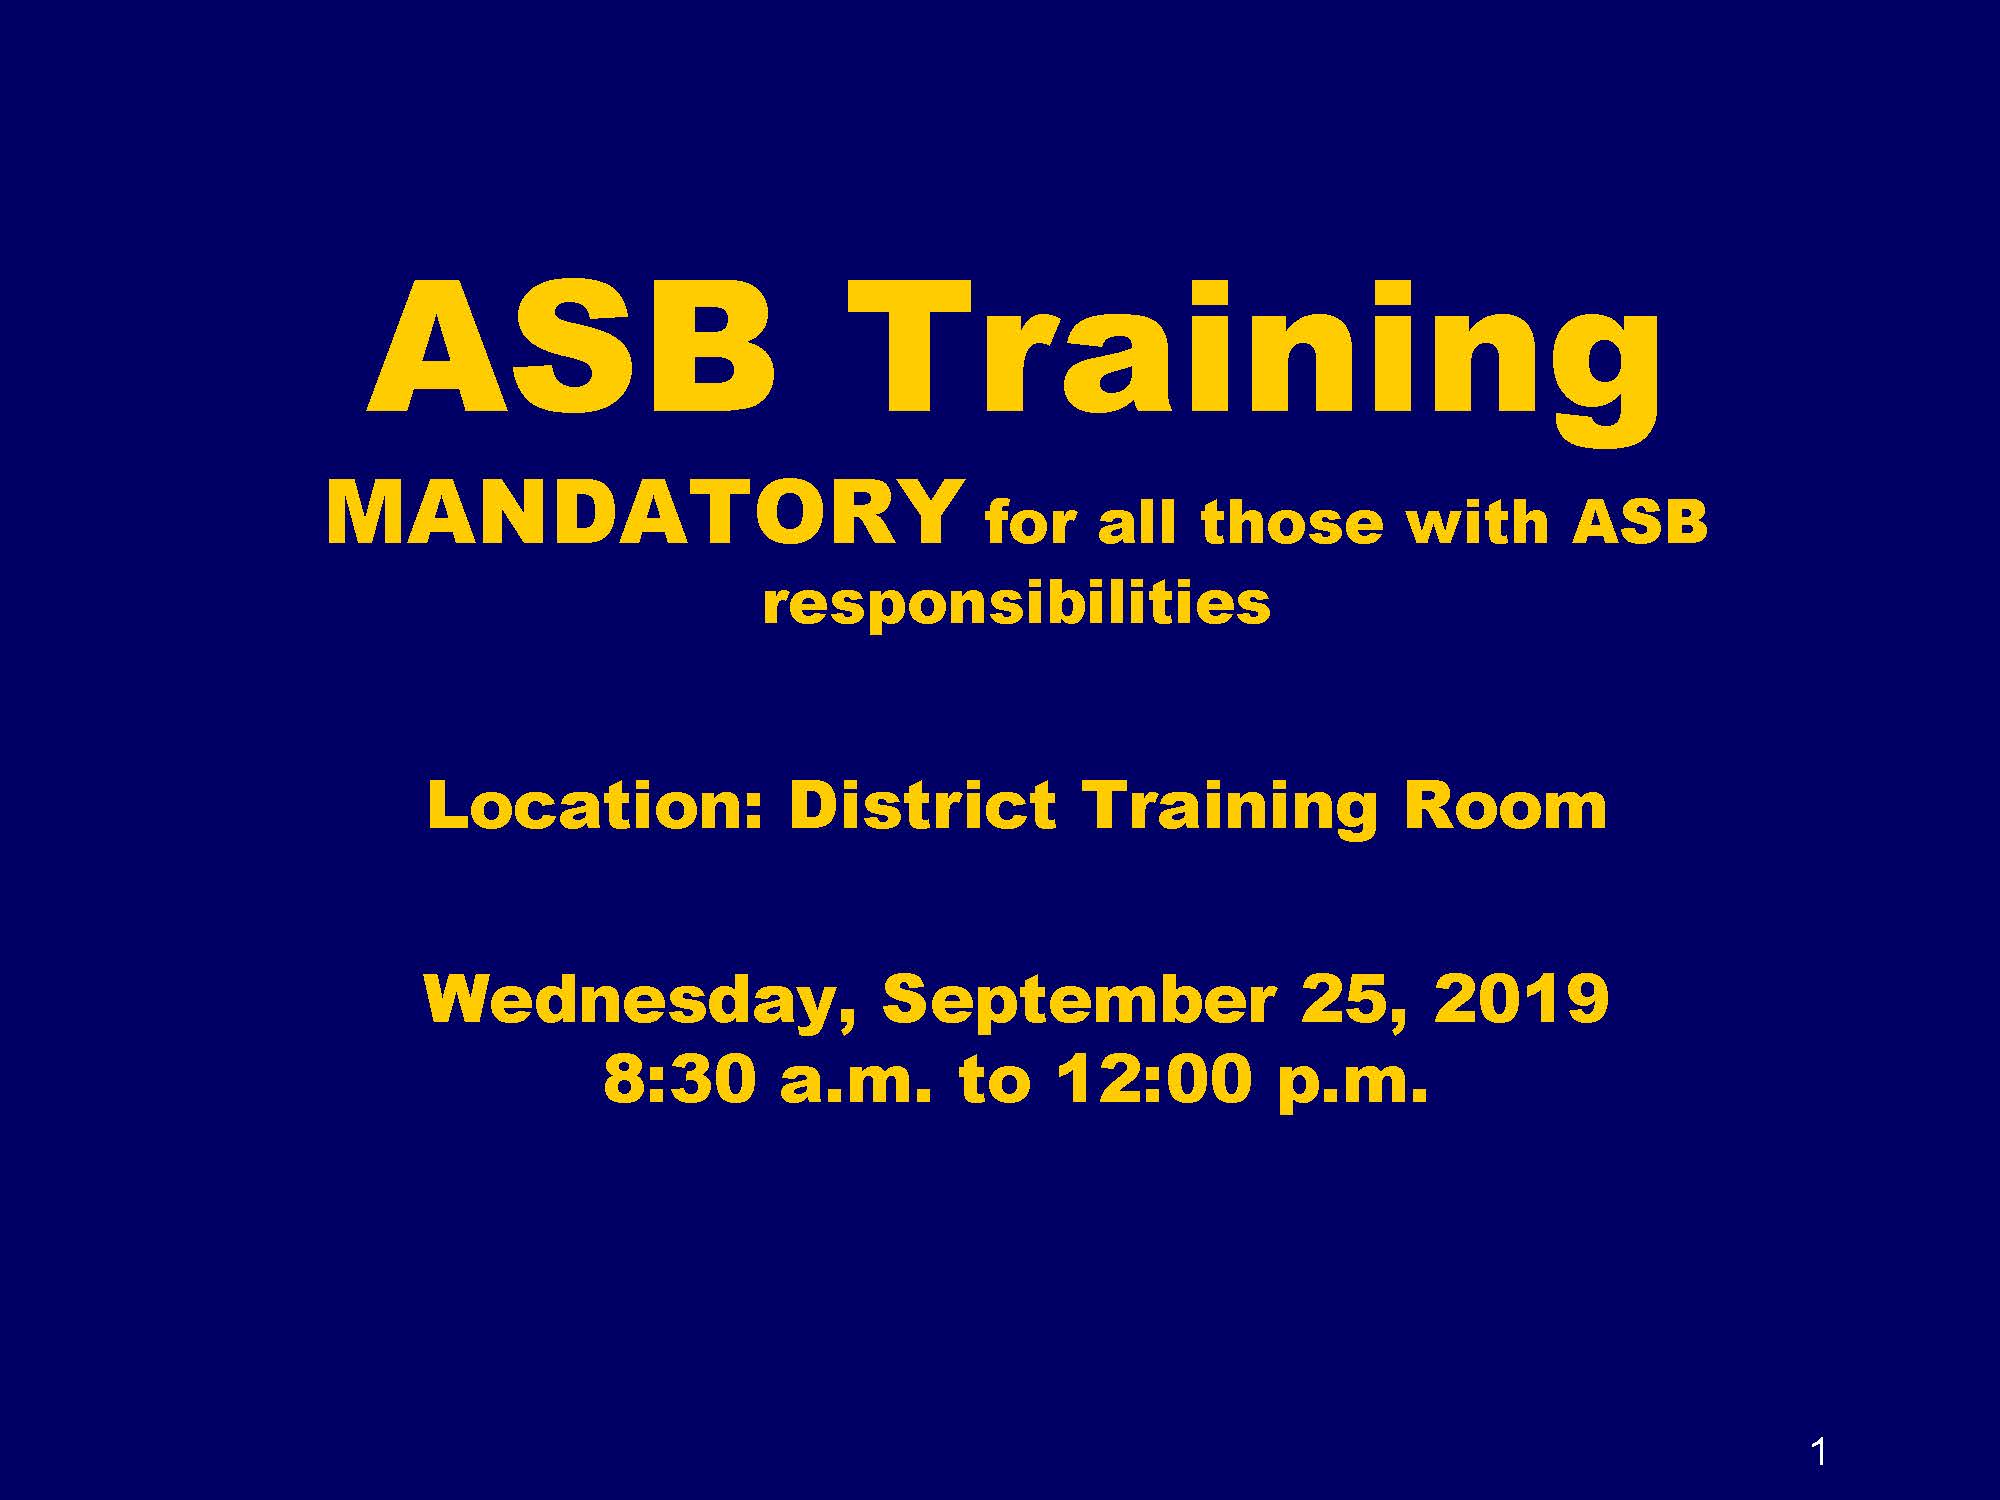 Mandatory ASB Training.jpg